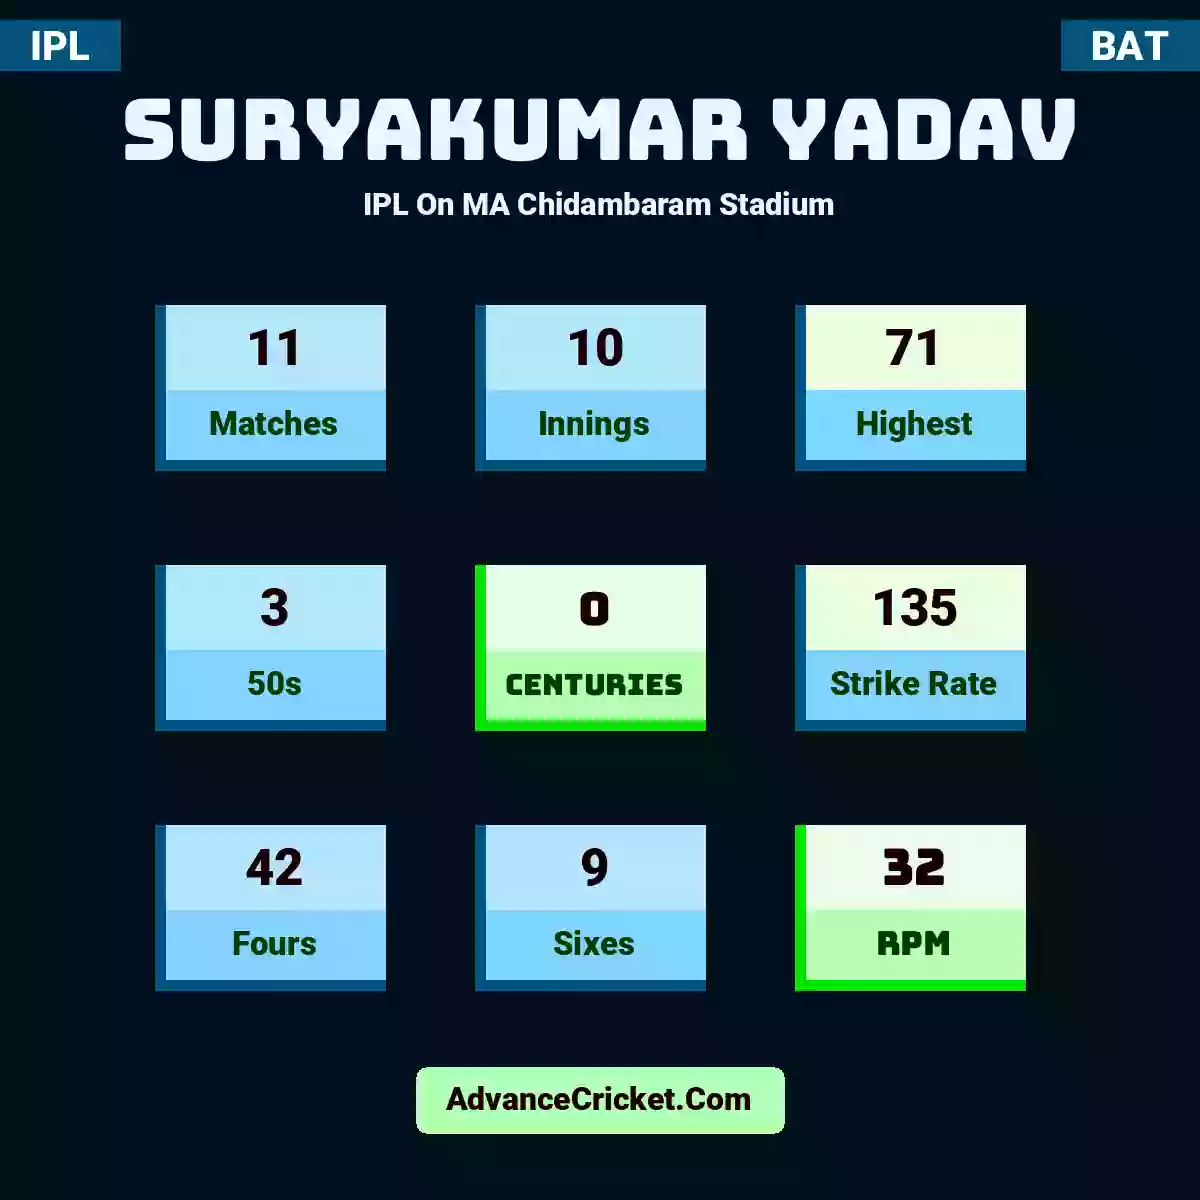 Suryakumar Yadav IPL  On MA Chidambaram Stadium, Suryakumar Yadav played 11 matches, scored 71 runs as highest, 3 half-centuries, and 0 centuries, with a strike rate of 135. S.Yadav hit 42 fours and 9 sixes, with an RPM of 32.